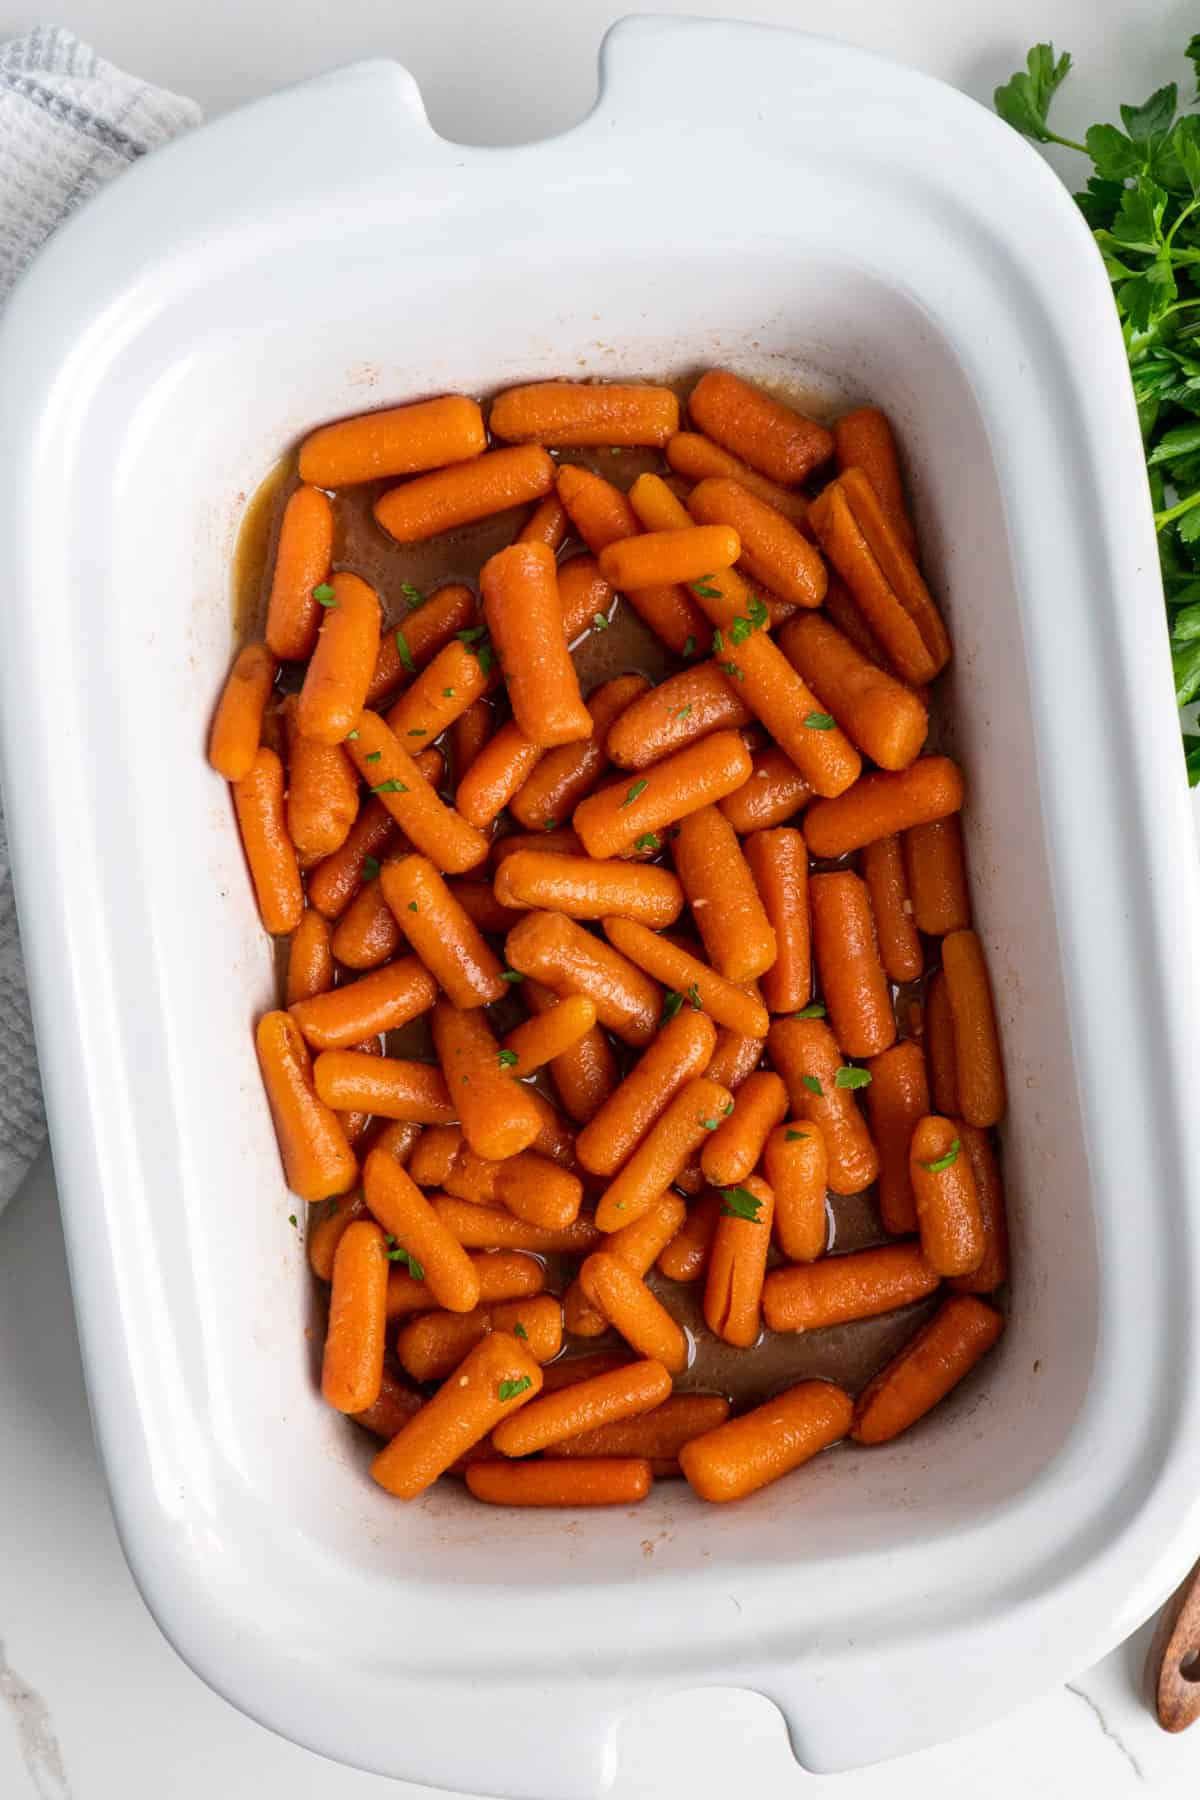 Honey glazed carrots in a white slow cooker.